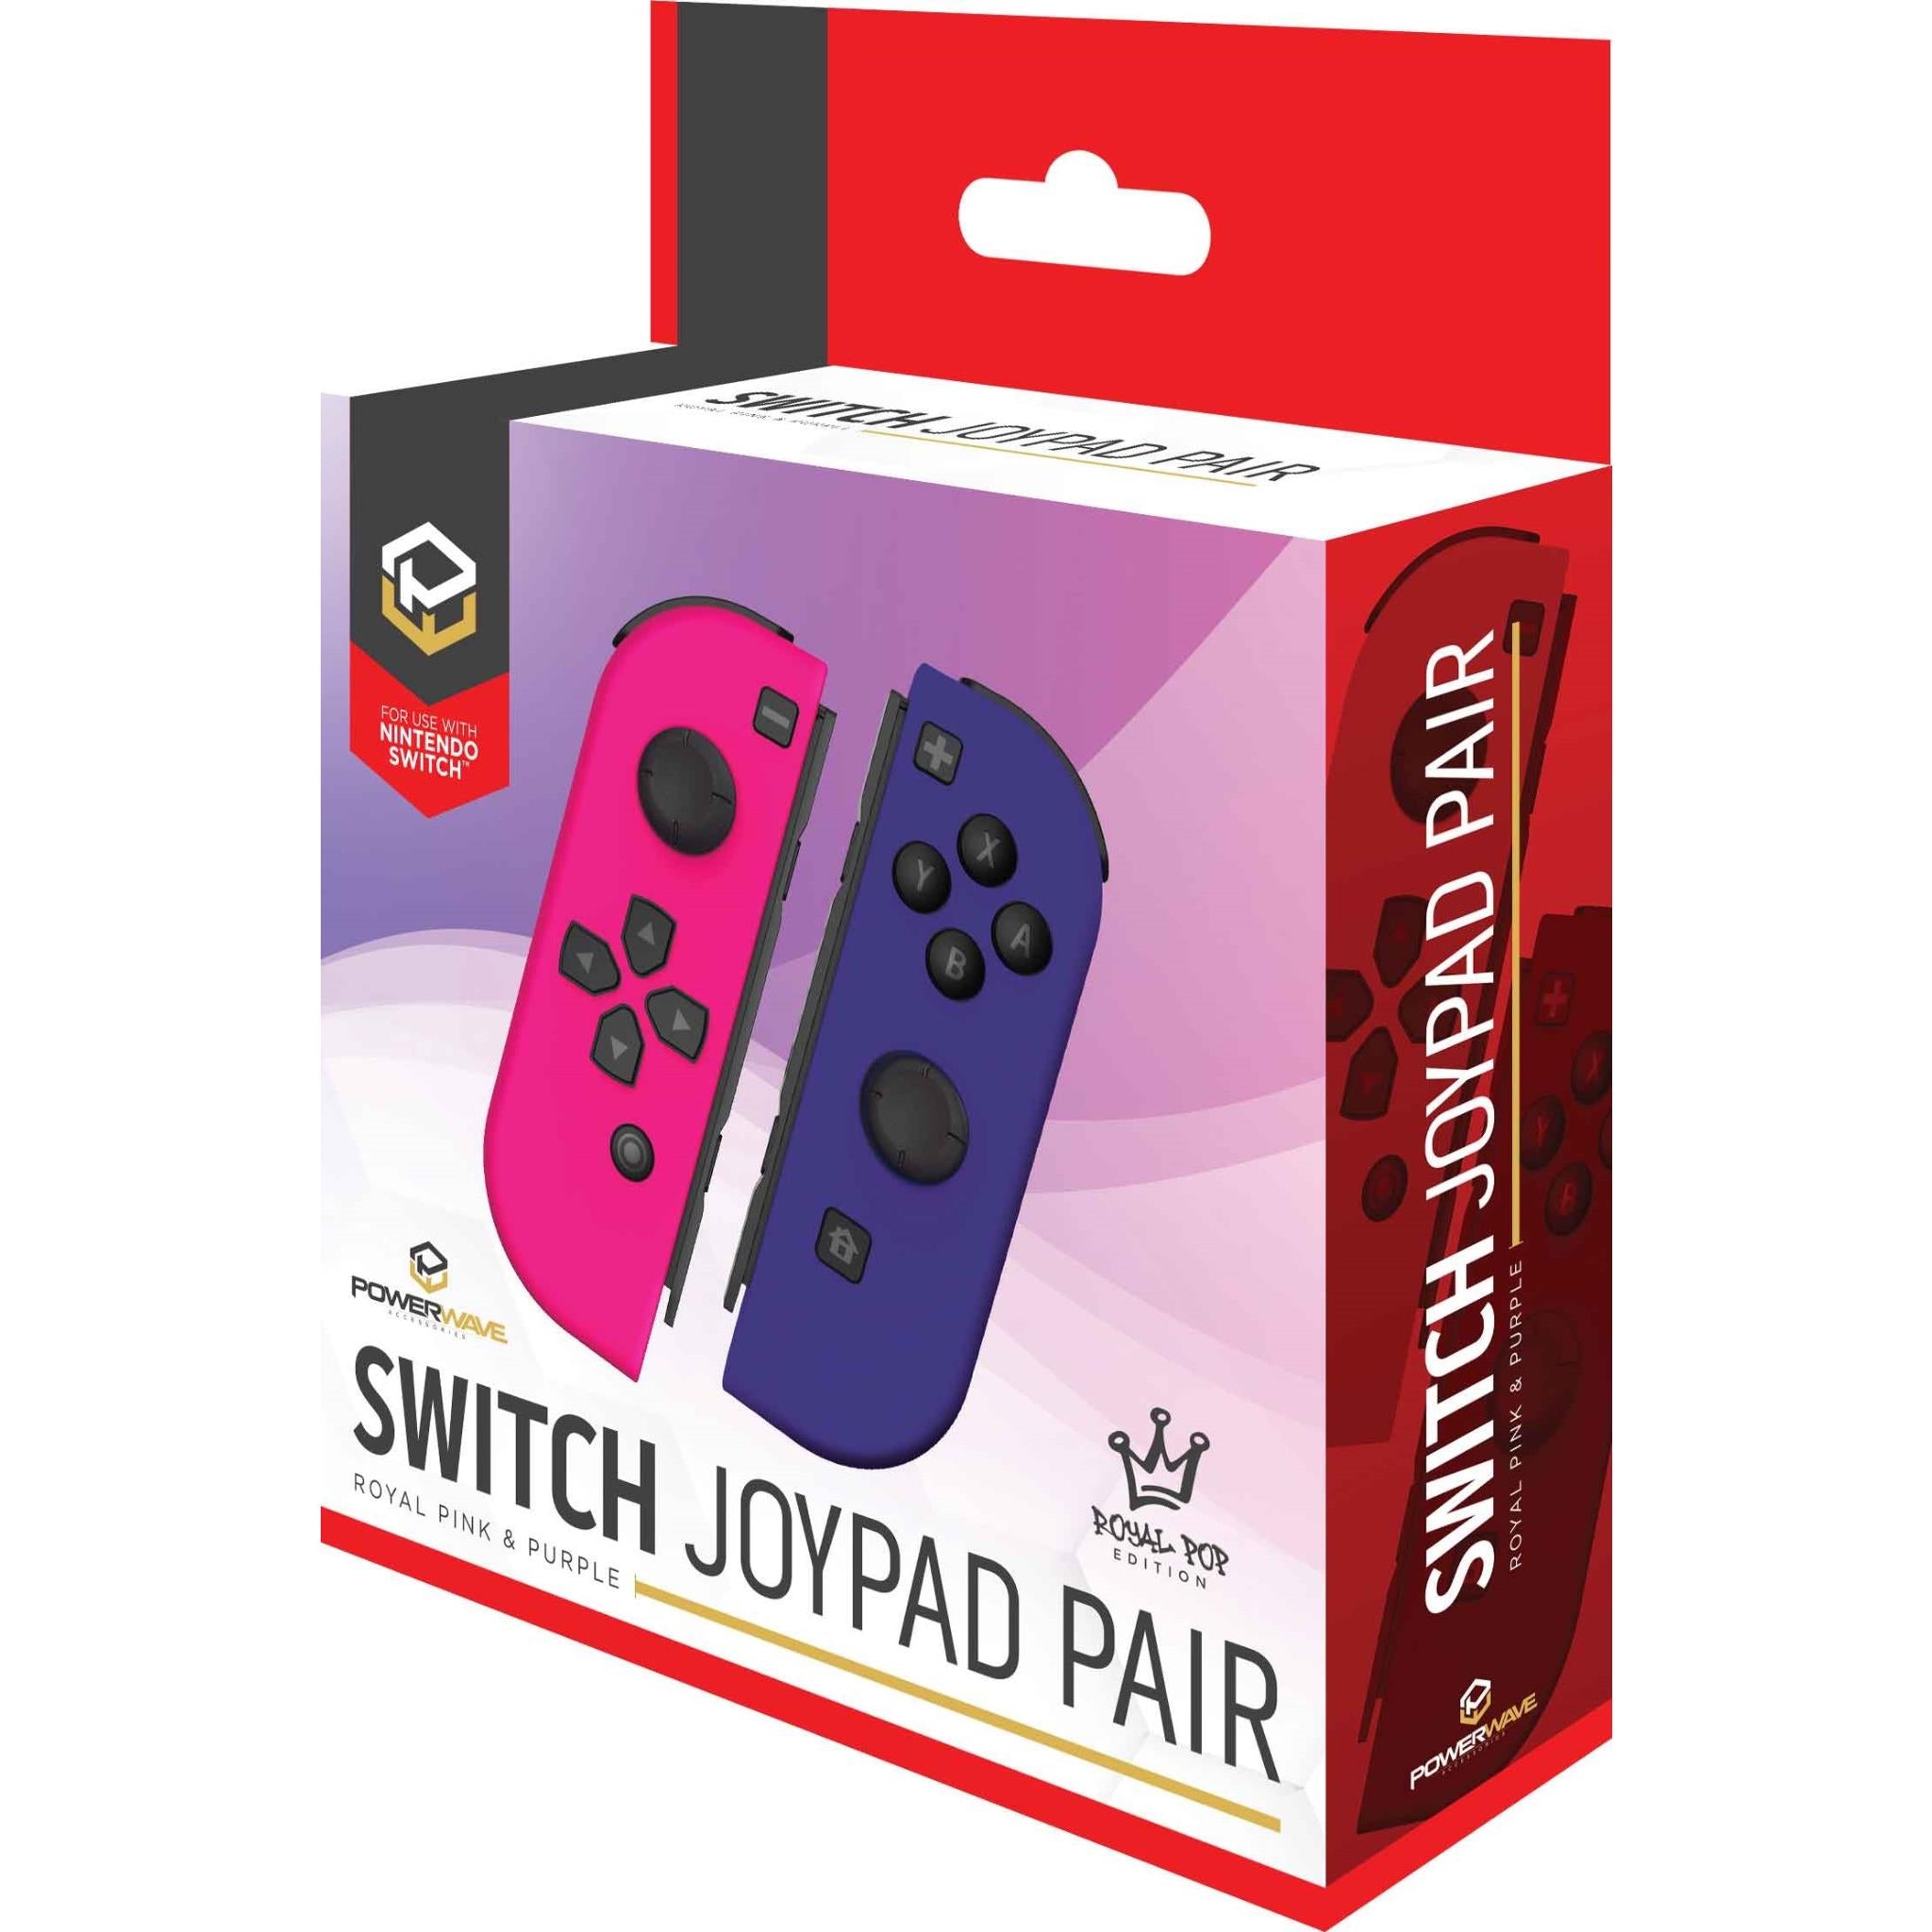 powerwave switch joypad pair royal pink & purple for nintendo switch